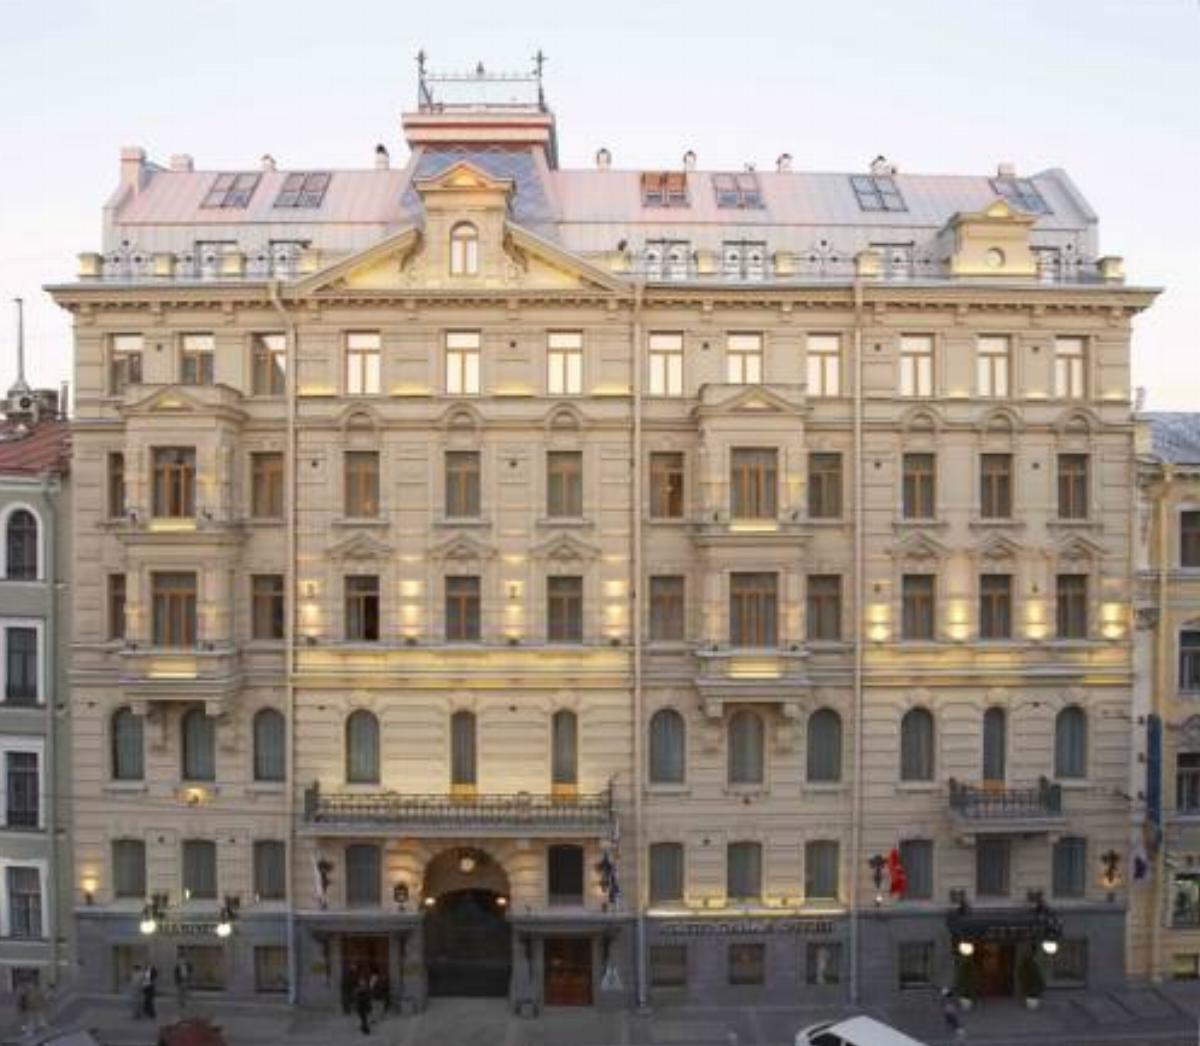 Petro Palace Hotel Hotel Saint Petersburg Russia